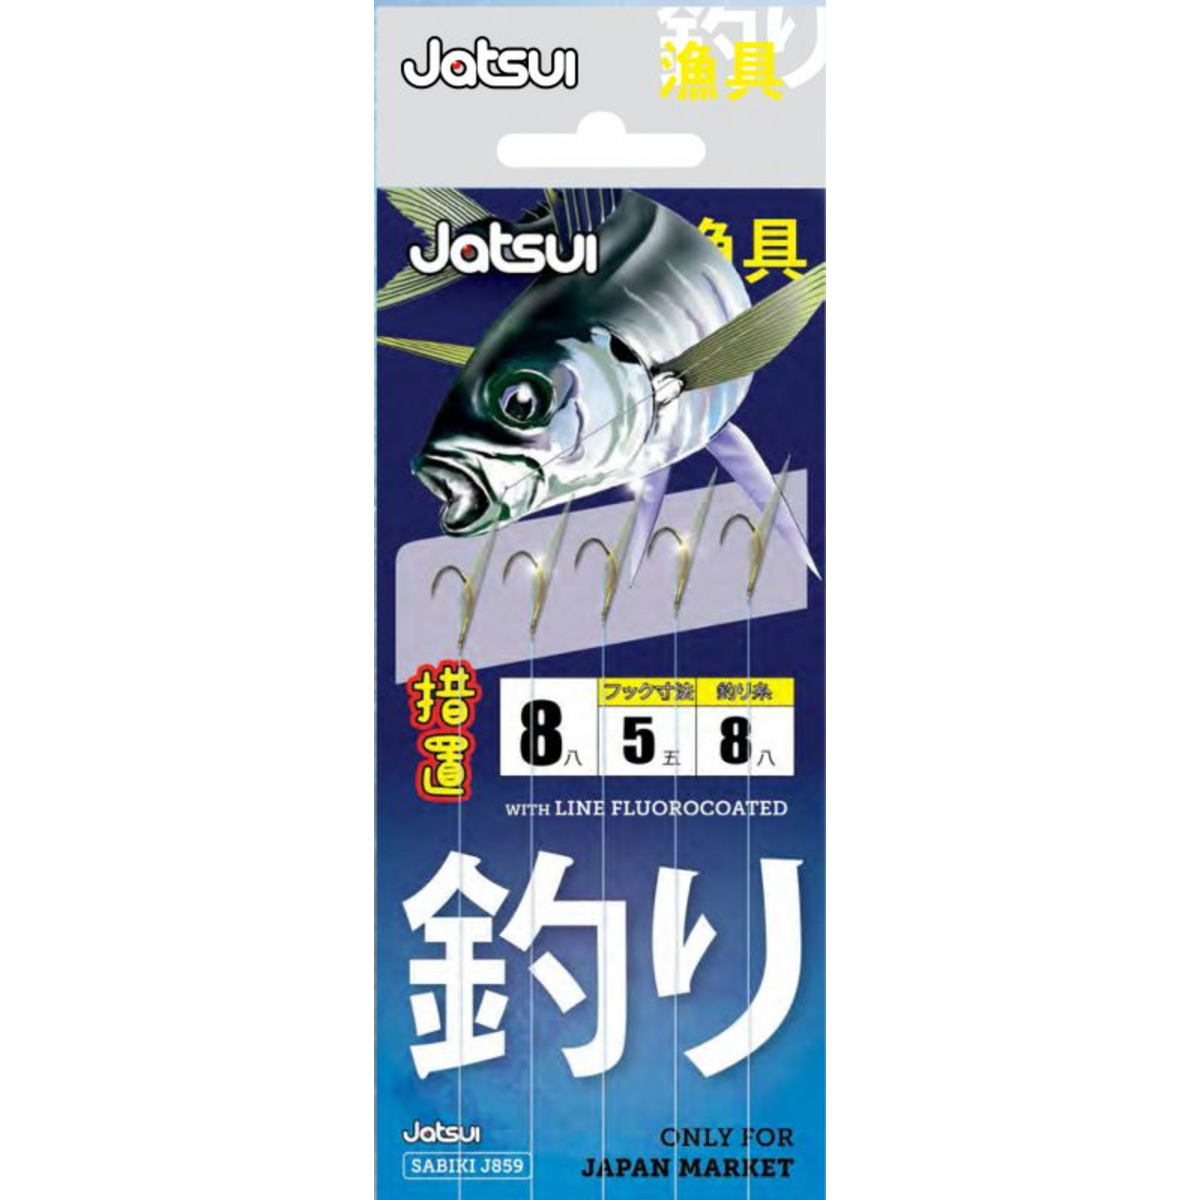 Jatsui Sabiki J859 - #12